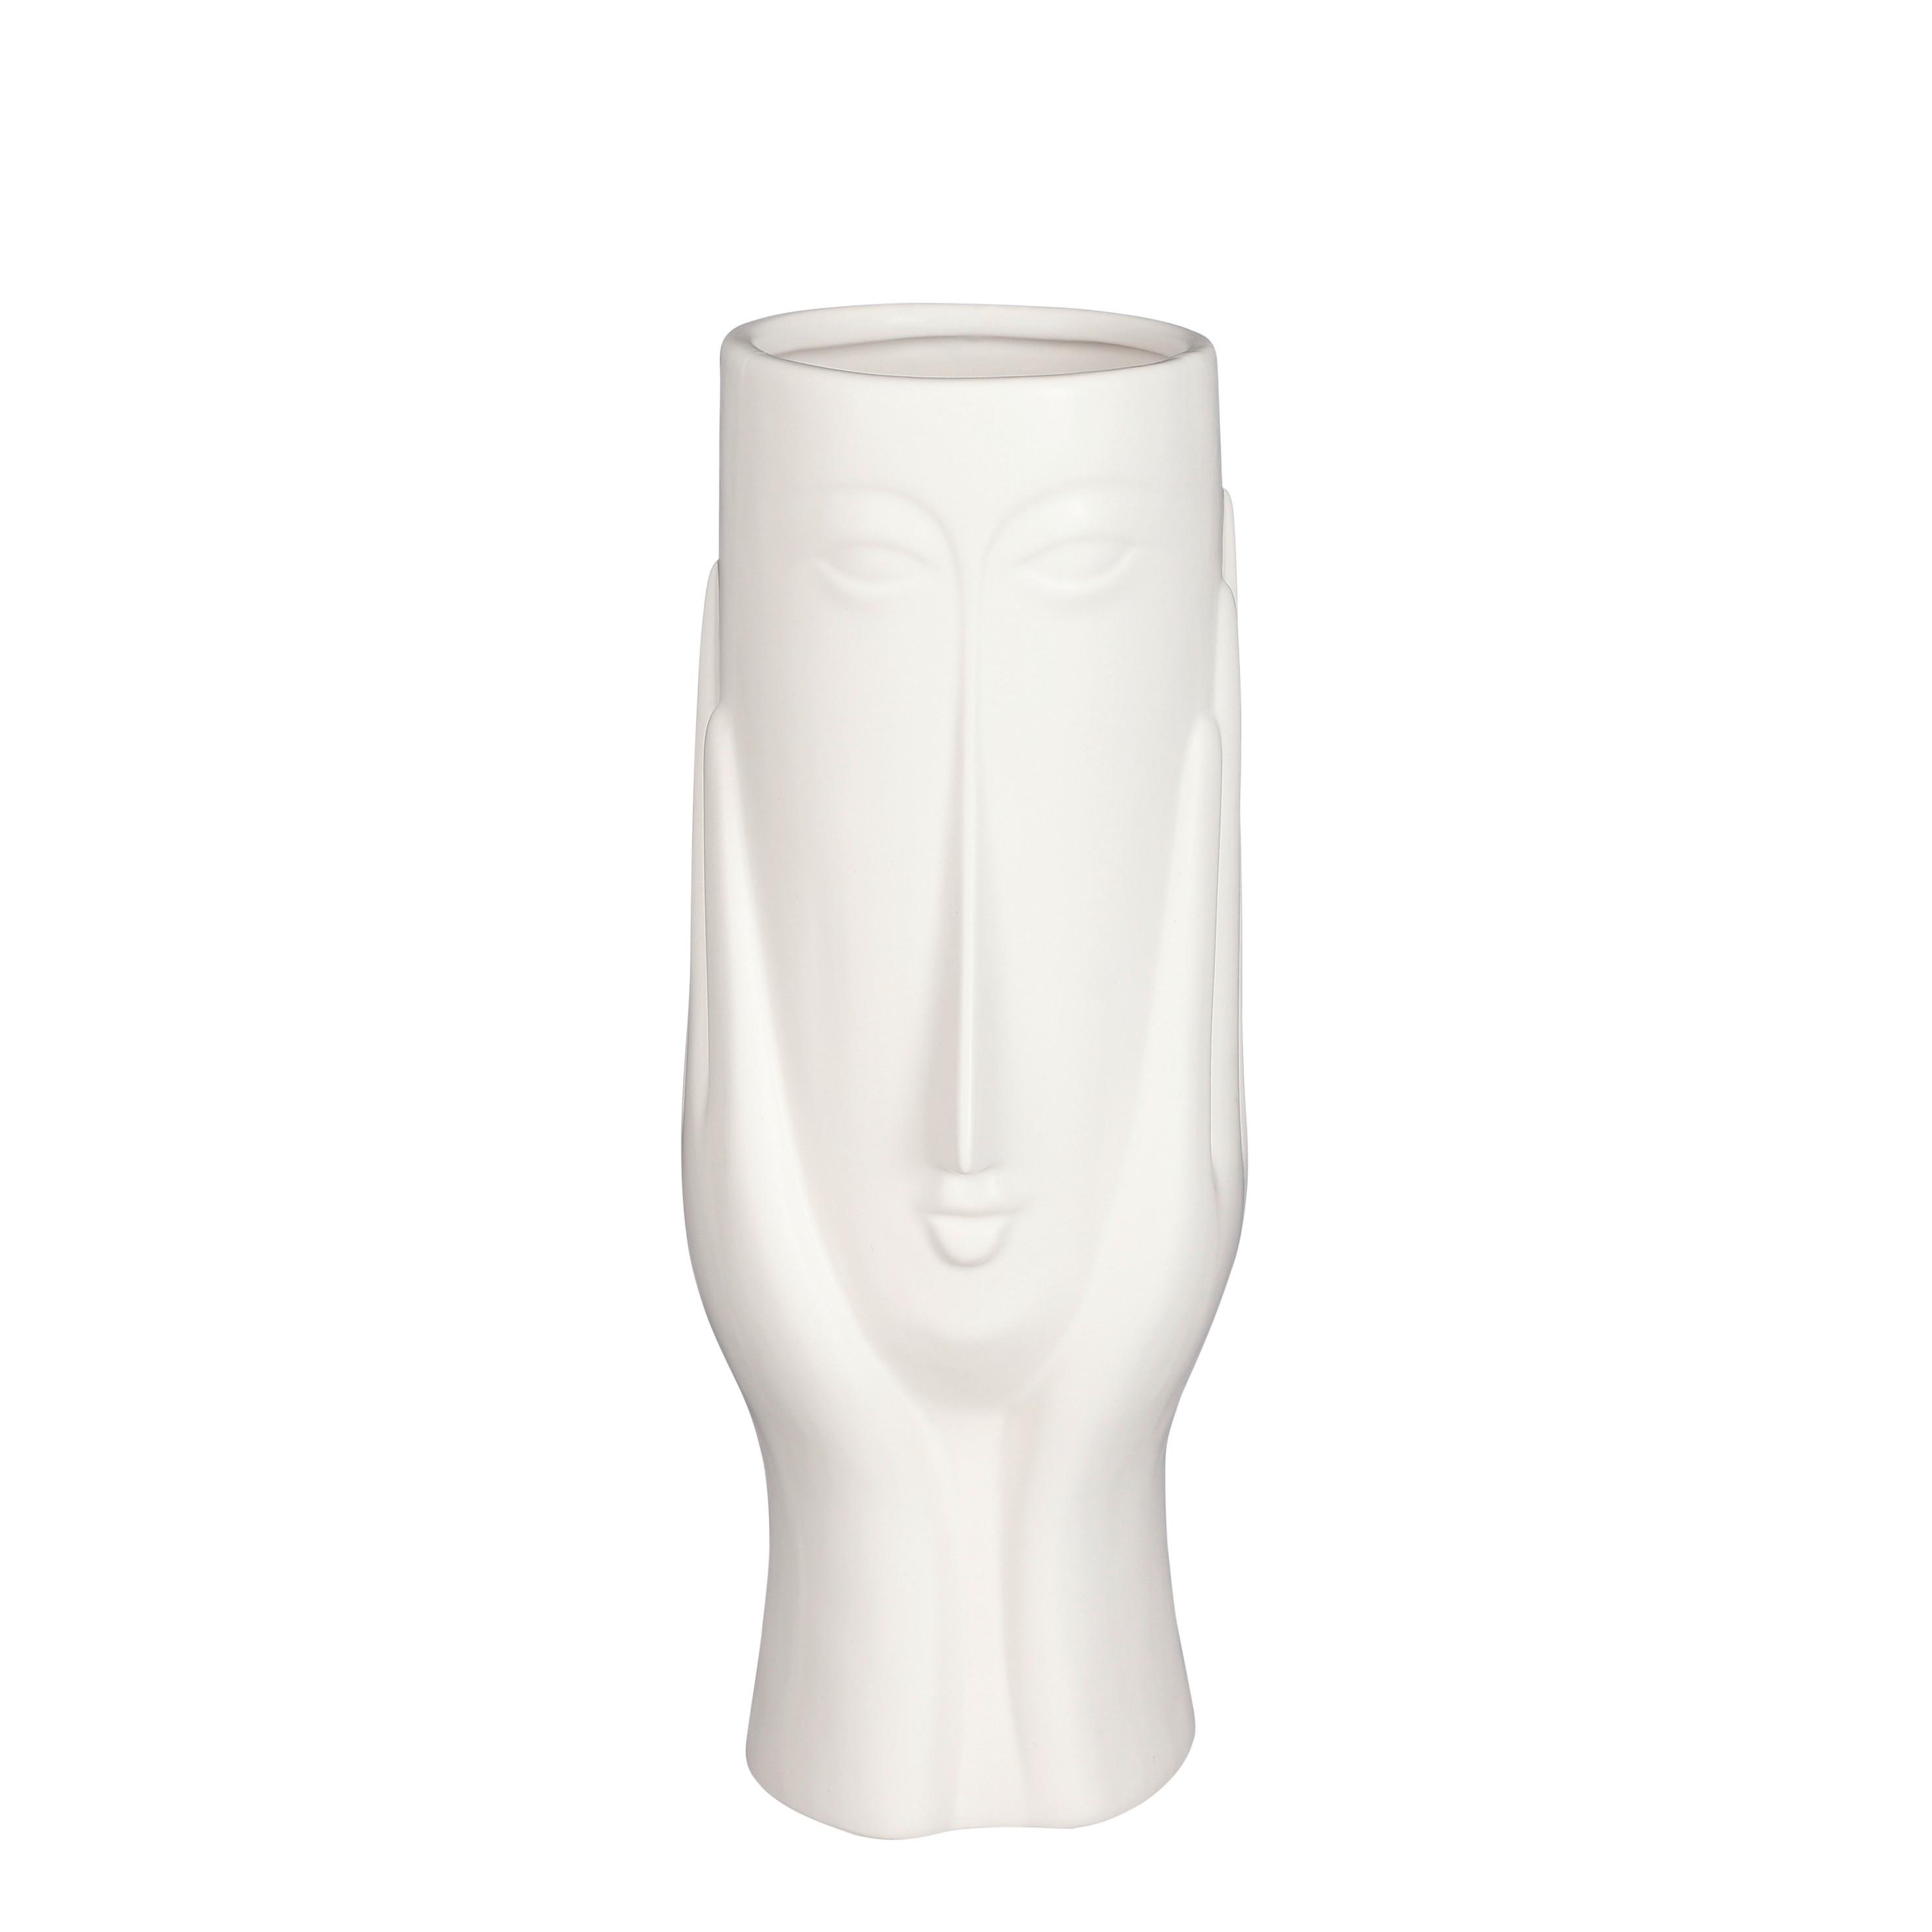 Vaza Face -Paz- - bela, Moderno, keramika (8,5/30cm) - Modern Living